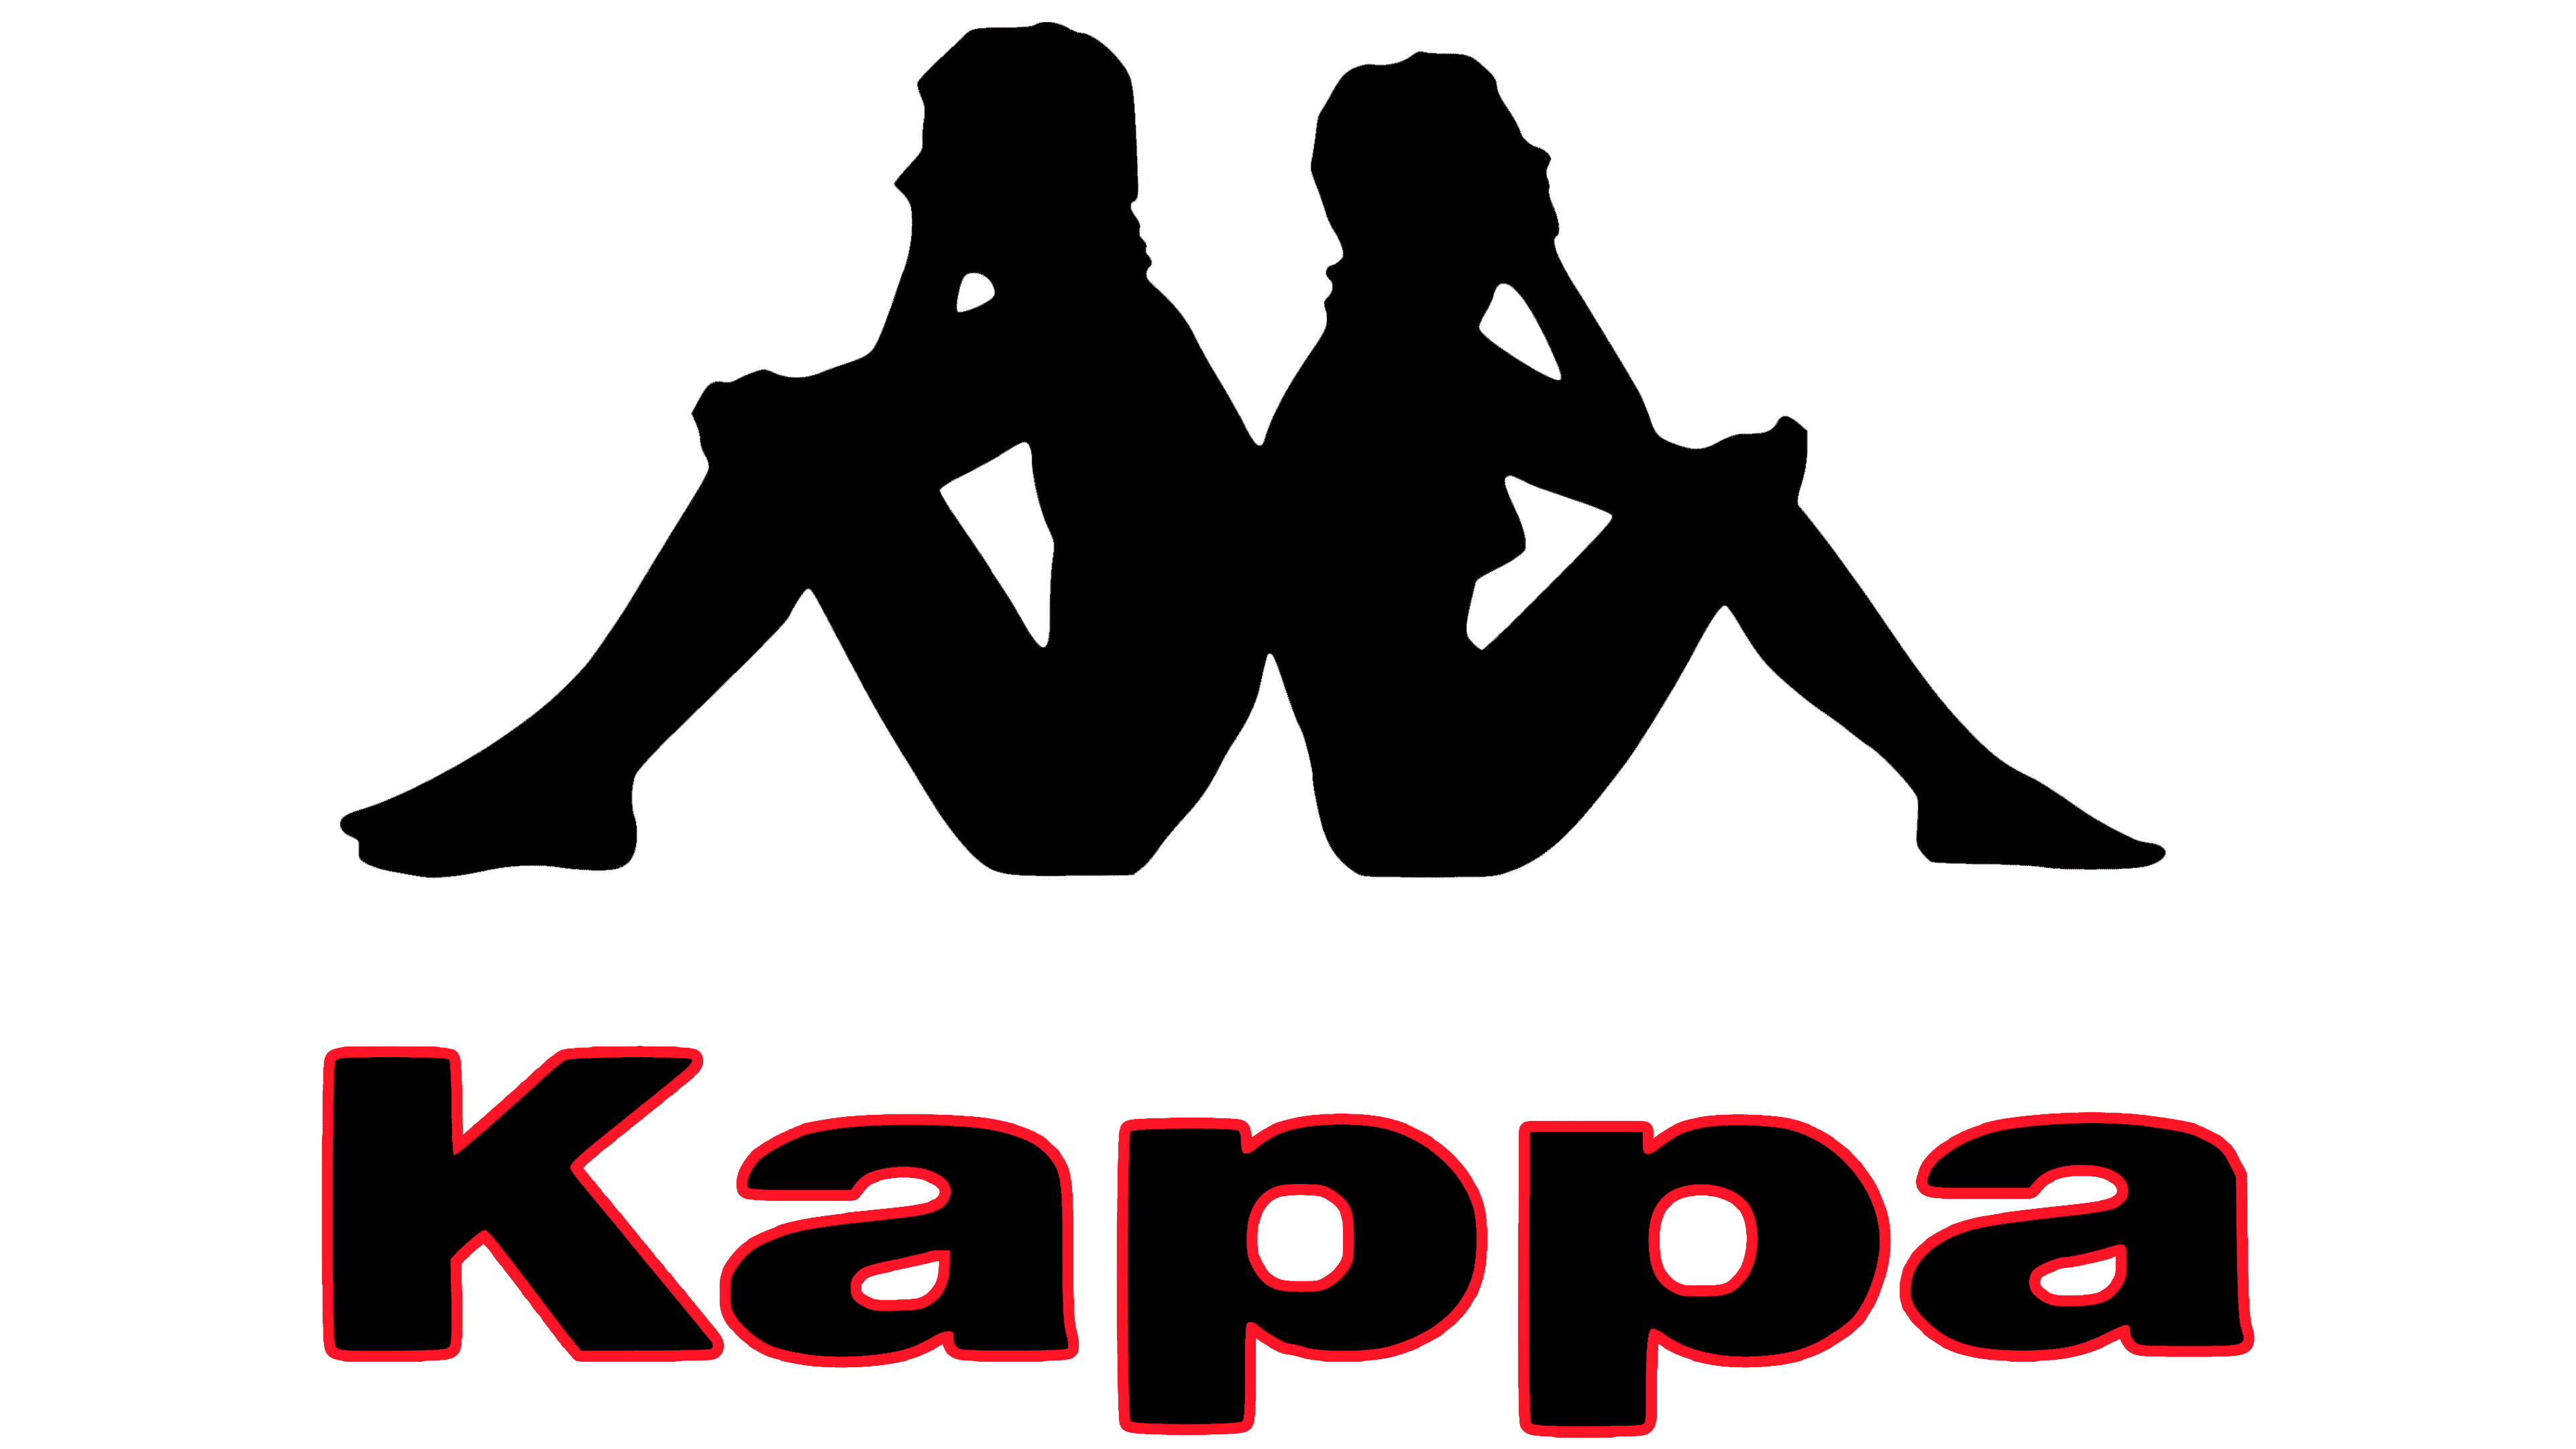 Husarbejde Jonglere New Zealand Kappa Logo, symbol, meaning, history, PNG, brand